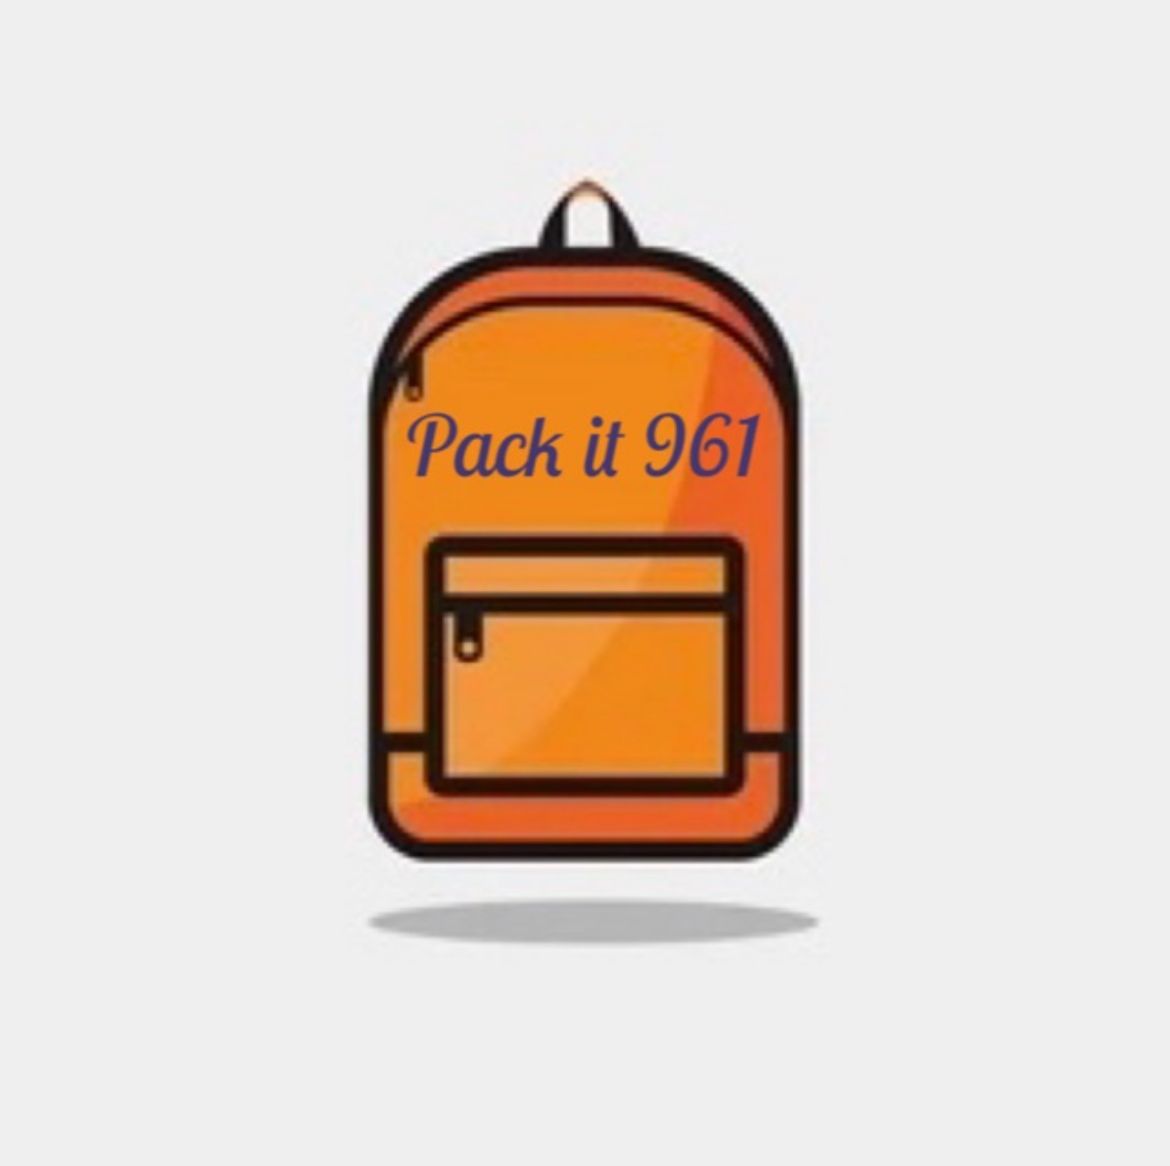 Pack.it.961